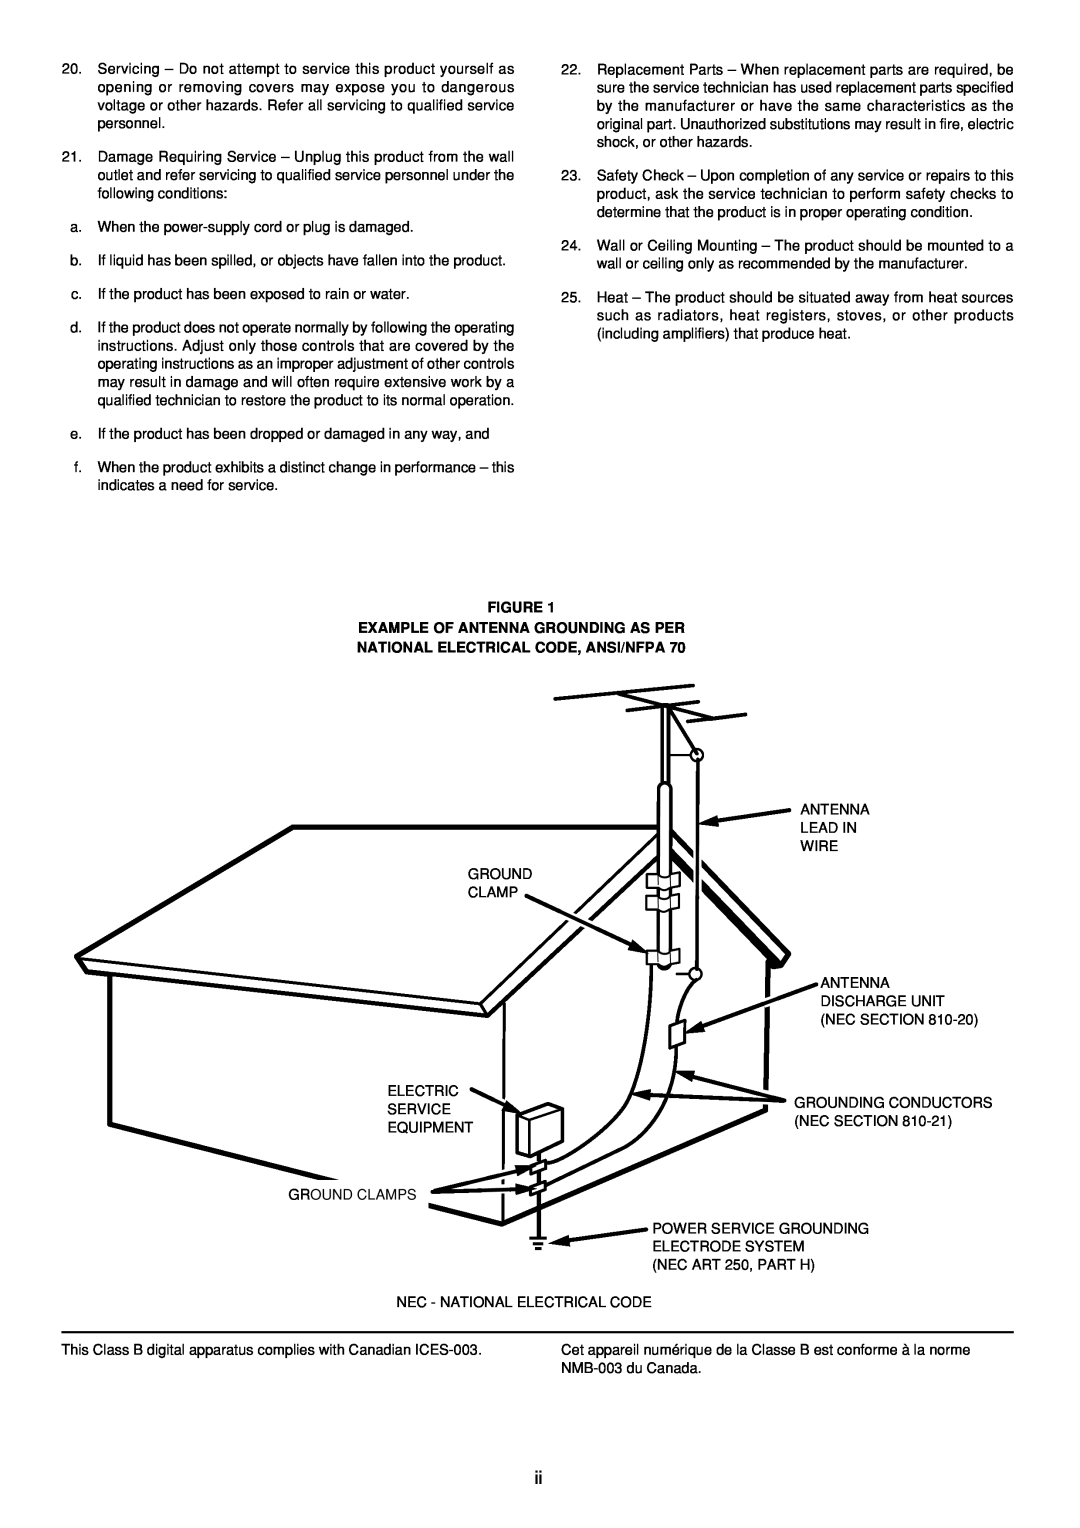 Marantz SR6300 manual Figure Example Of Antenna Grounding As Per, National Electrical Code, Ansi/Nfpa 